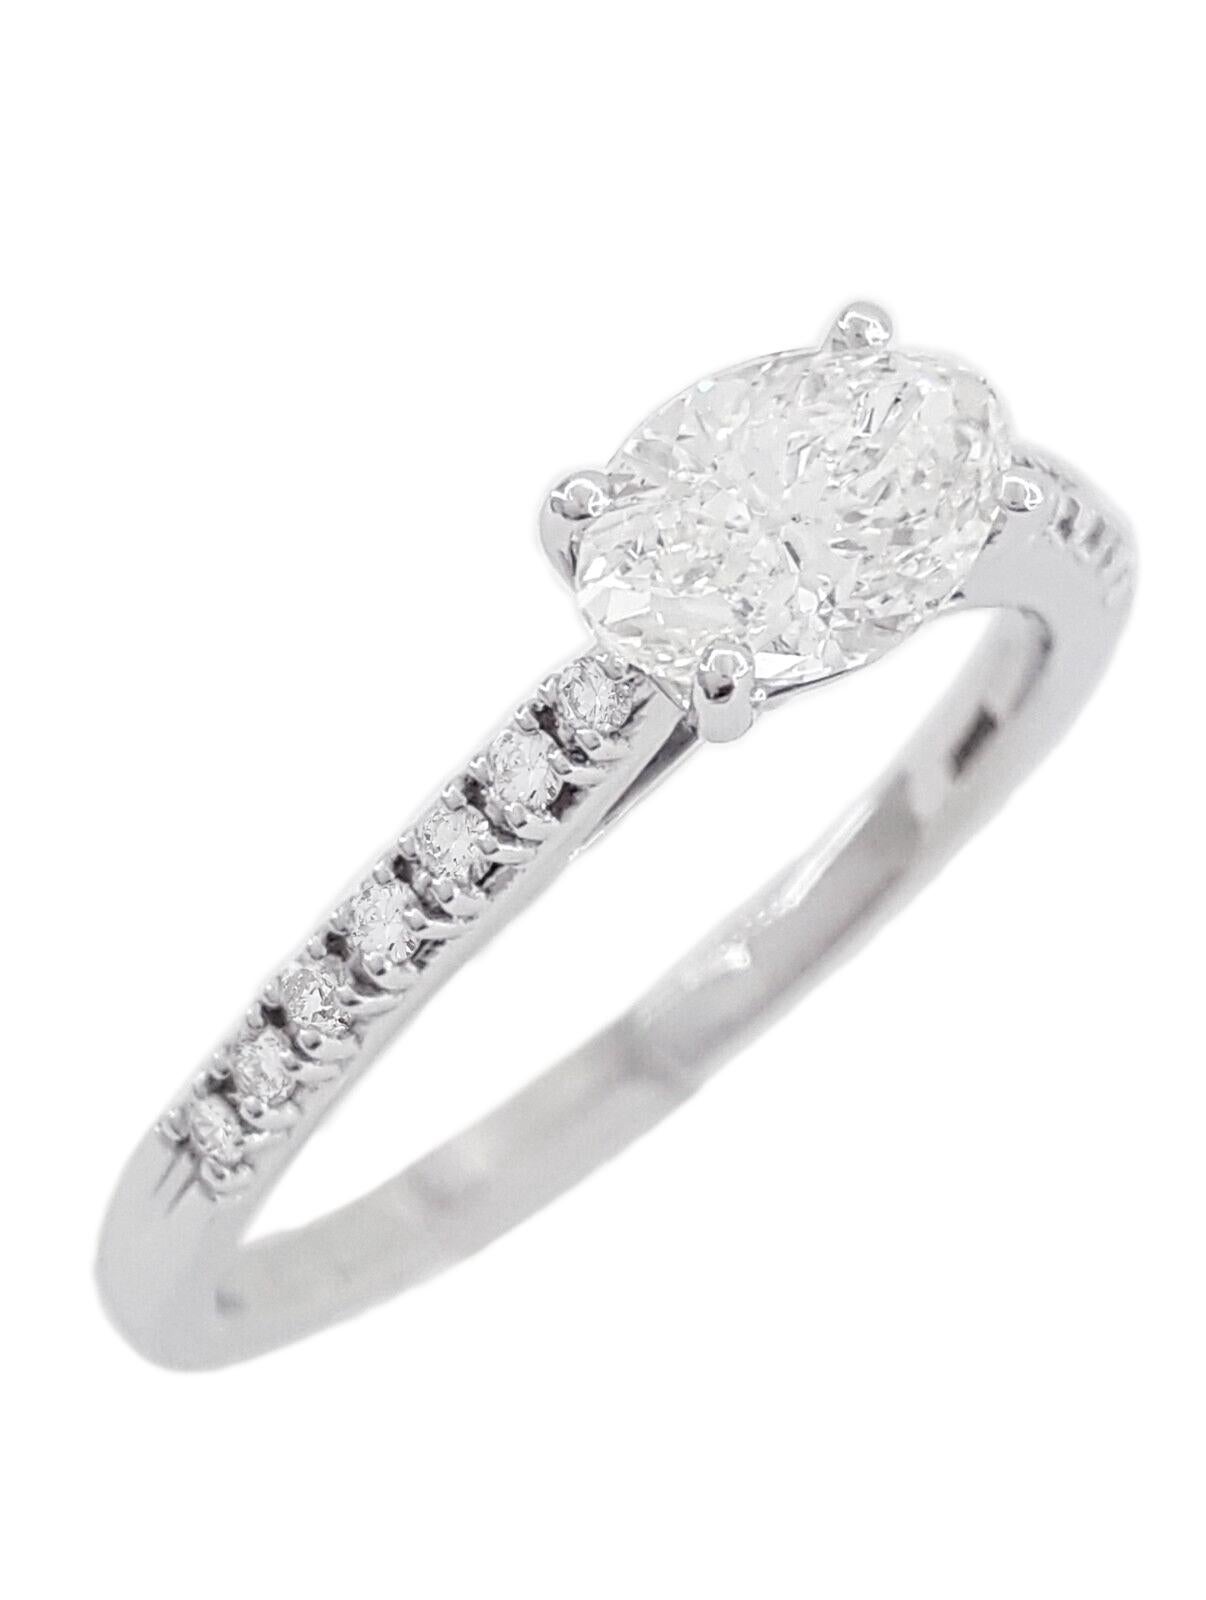 Oval Cut EGL USA 1.25 Carat Oval Diamond Ring For Sale